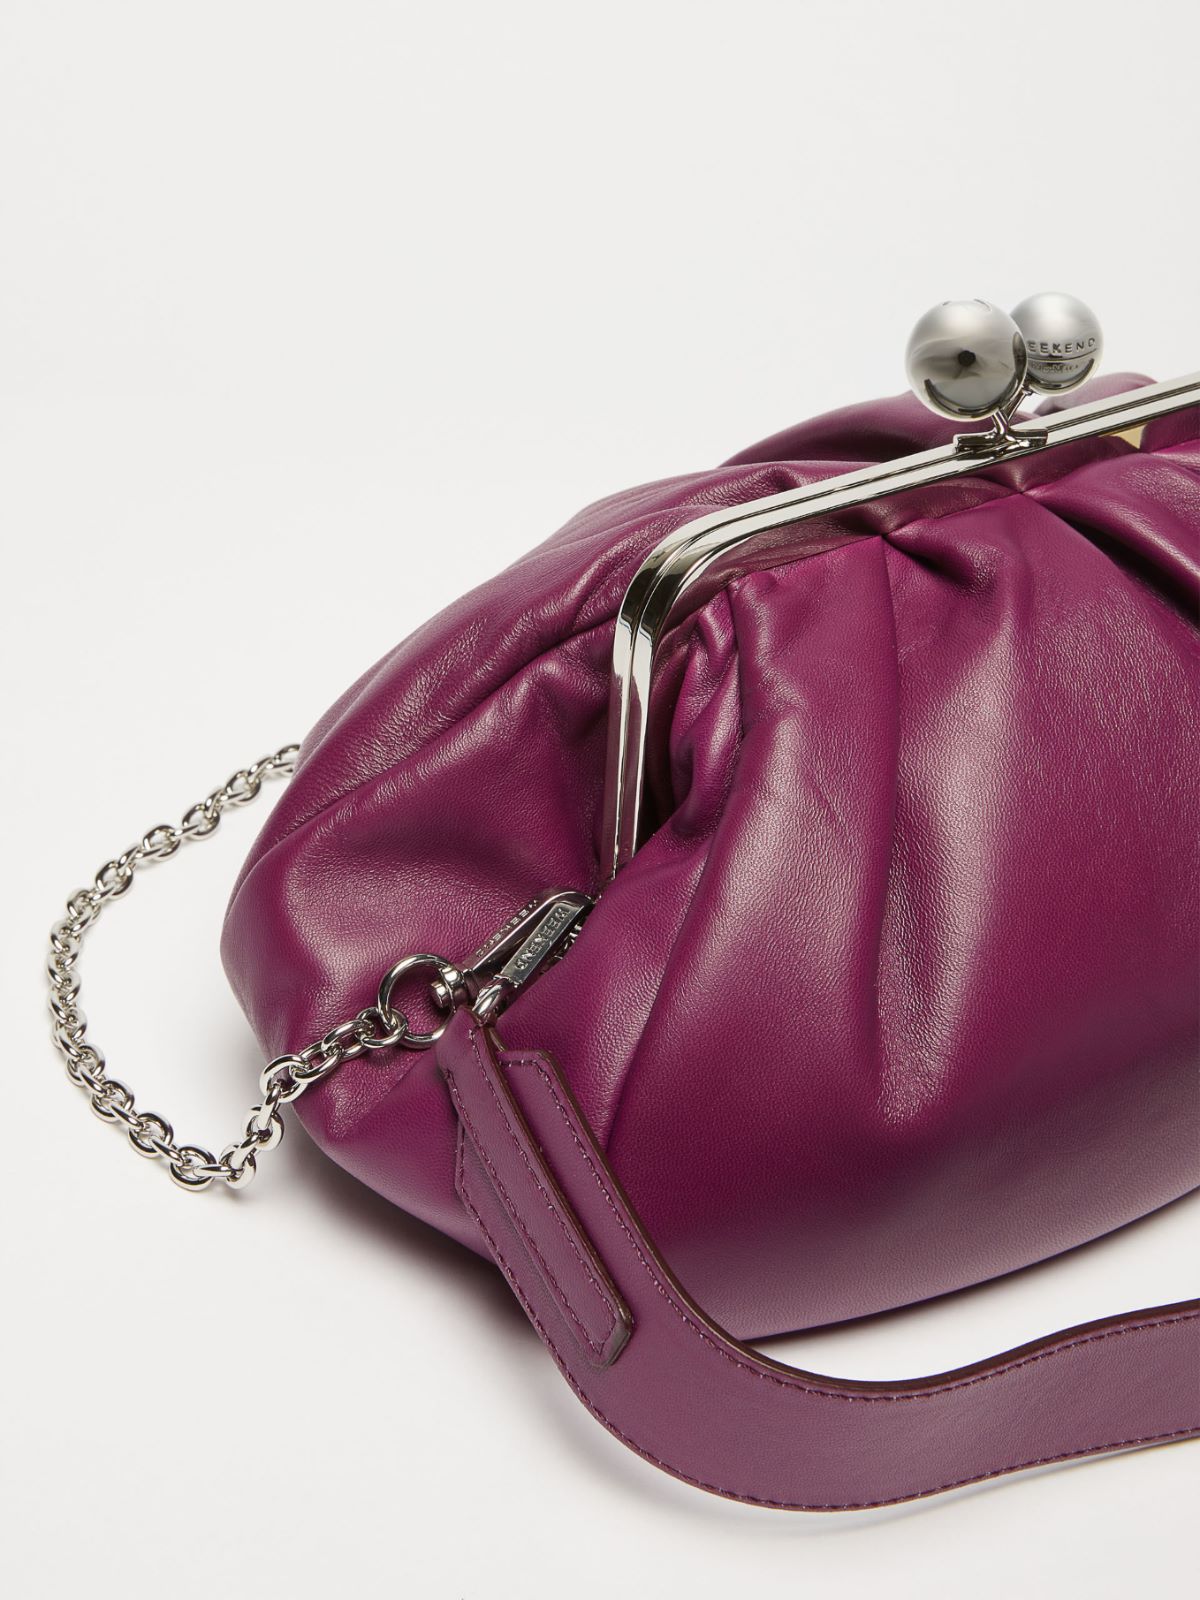 Medium Pasticcino Bag in nappa leather - PURPLE - Weekend Max Mara - 4